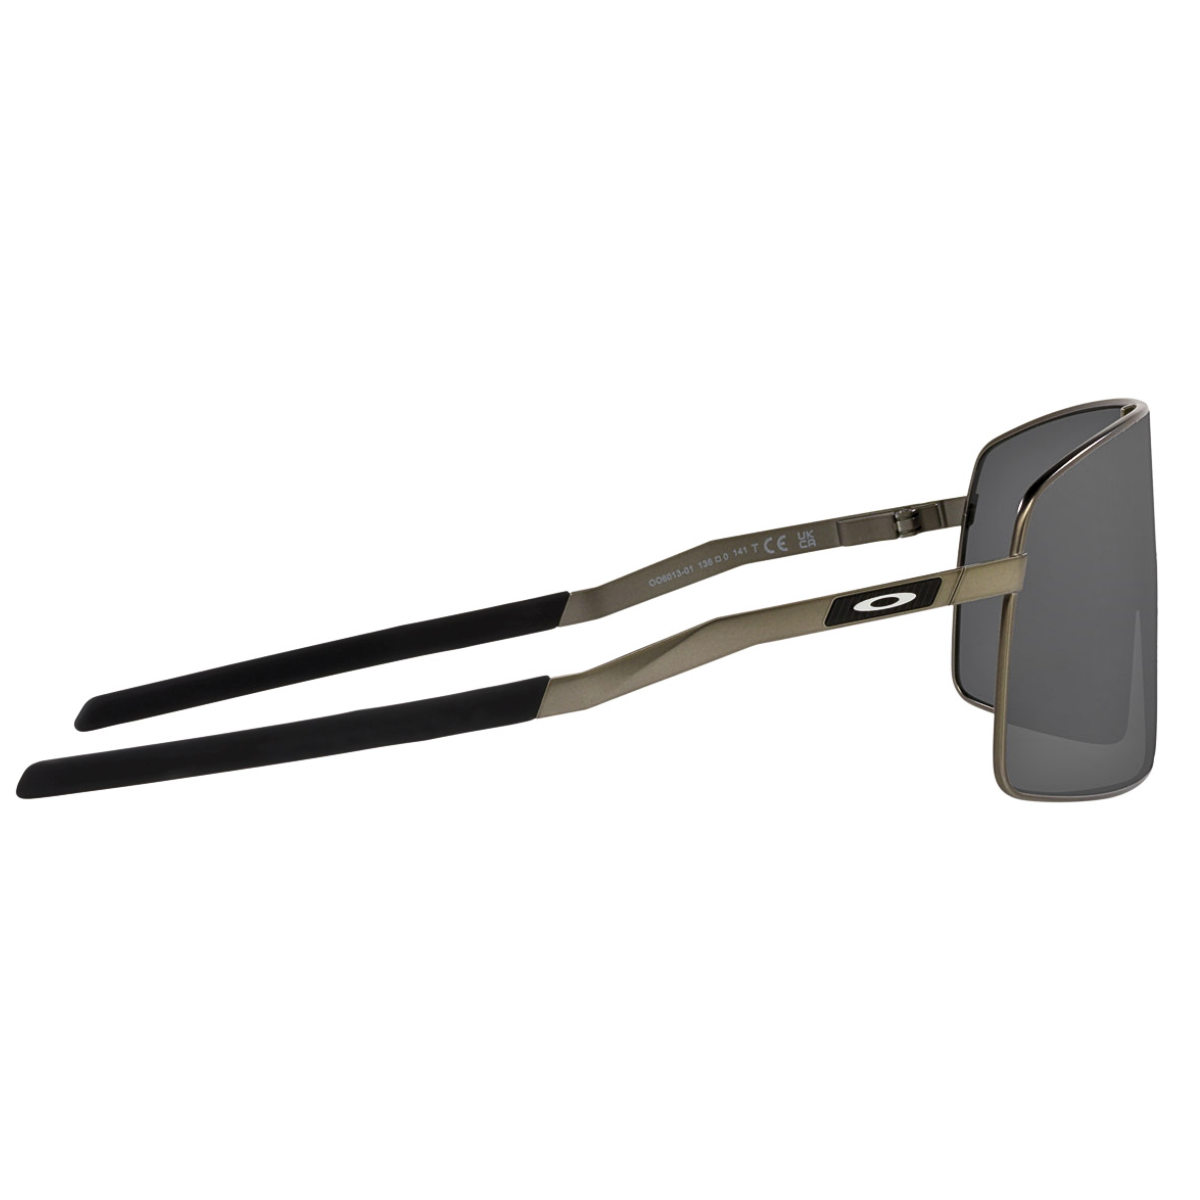 Oakley 0006013 SUTRO TI Matte Gunmetal Prizm Black Sunglasses - Only Prepaid Order